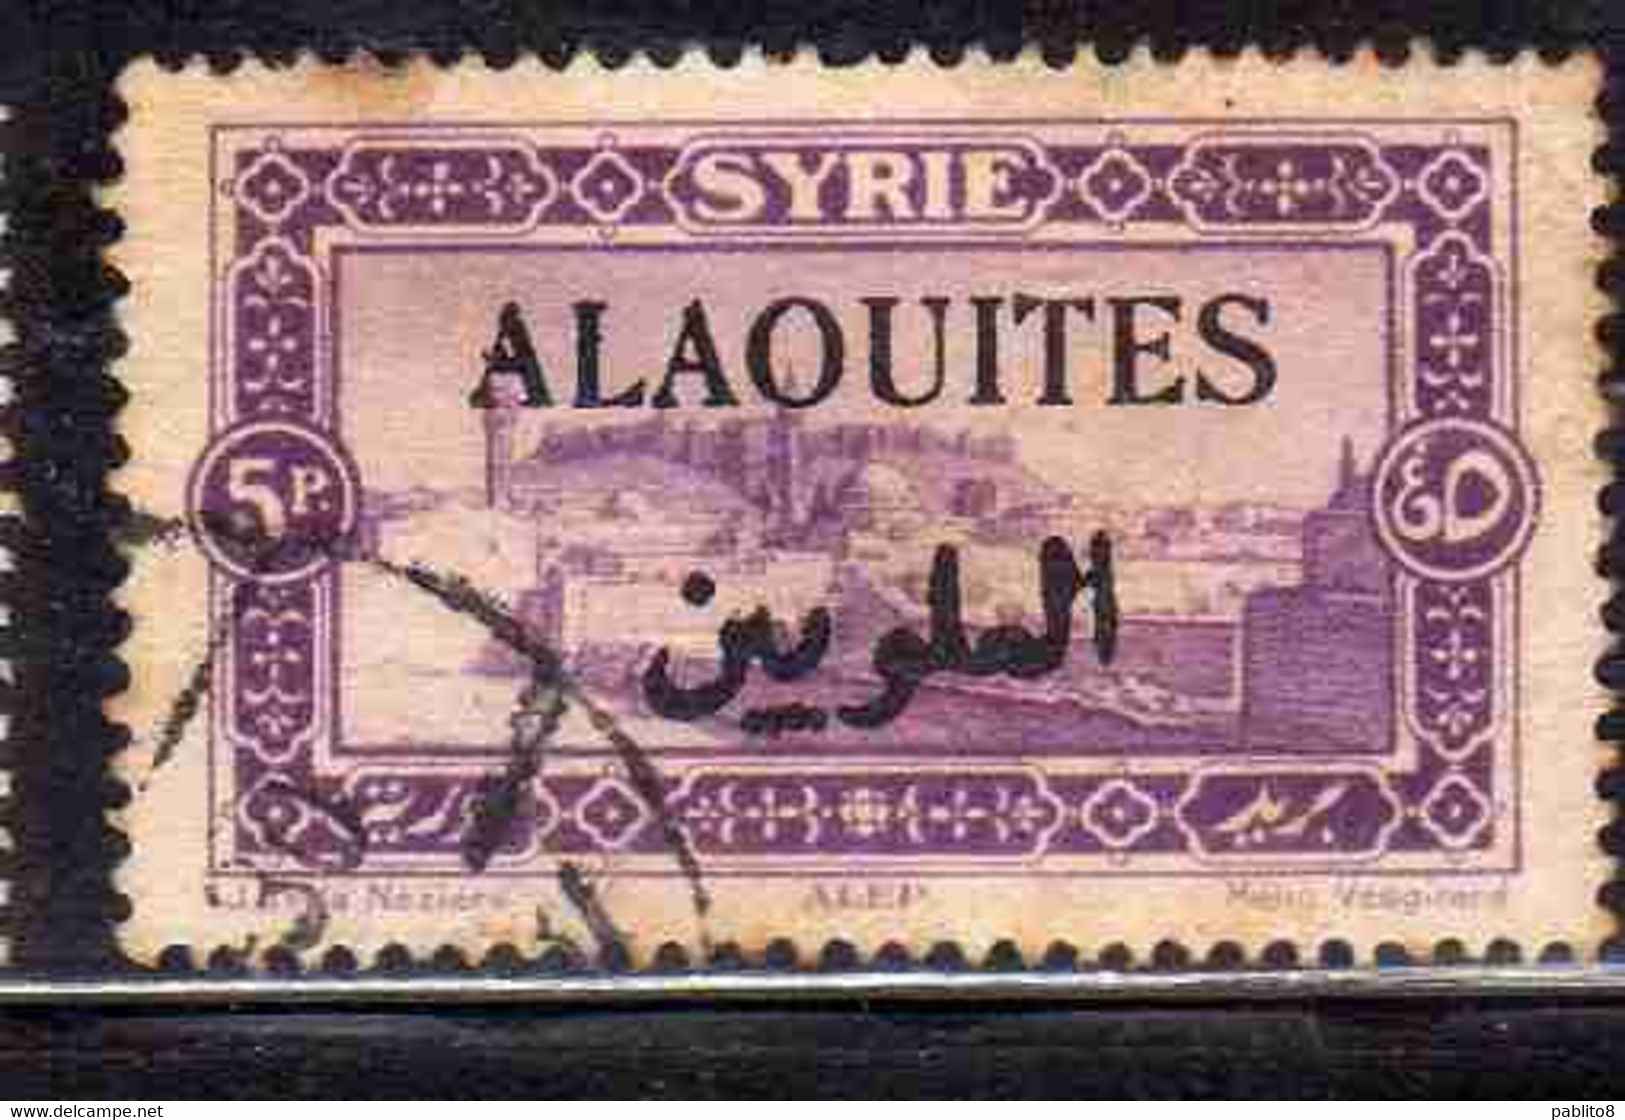 ALAOUITES SYRIA SIRIA ALAQUITES 1925 VIEW OF ALEPPO 5p USED USATO OBLITERE' - Oblitérés